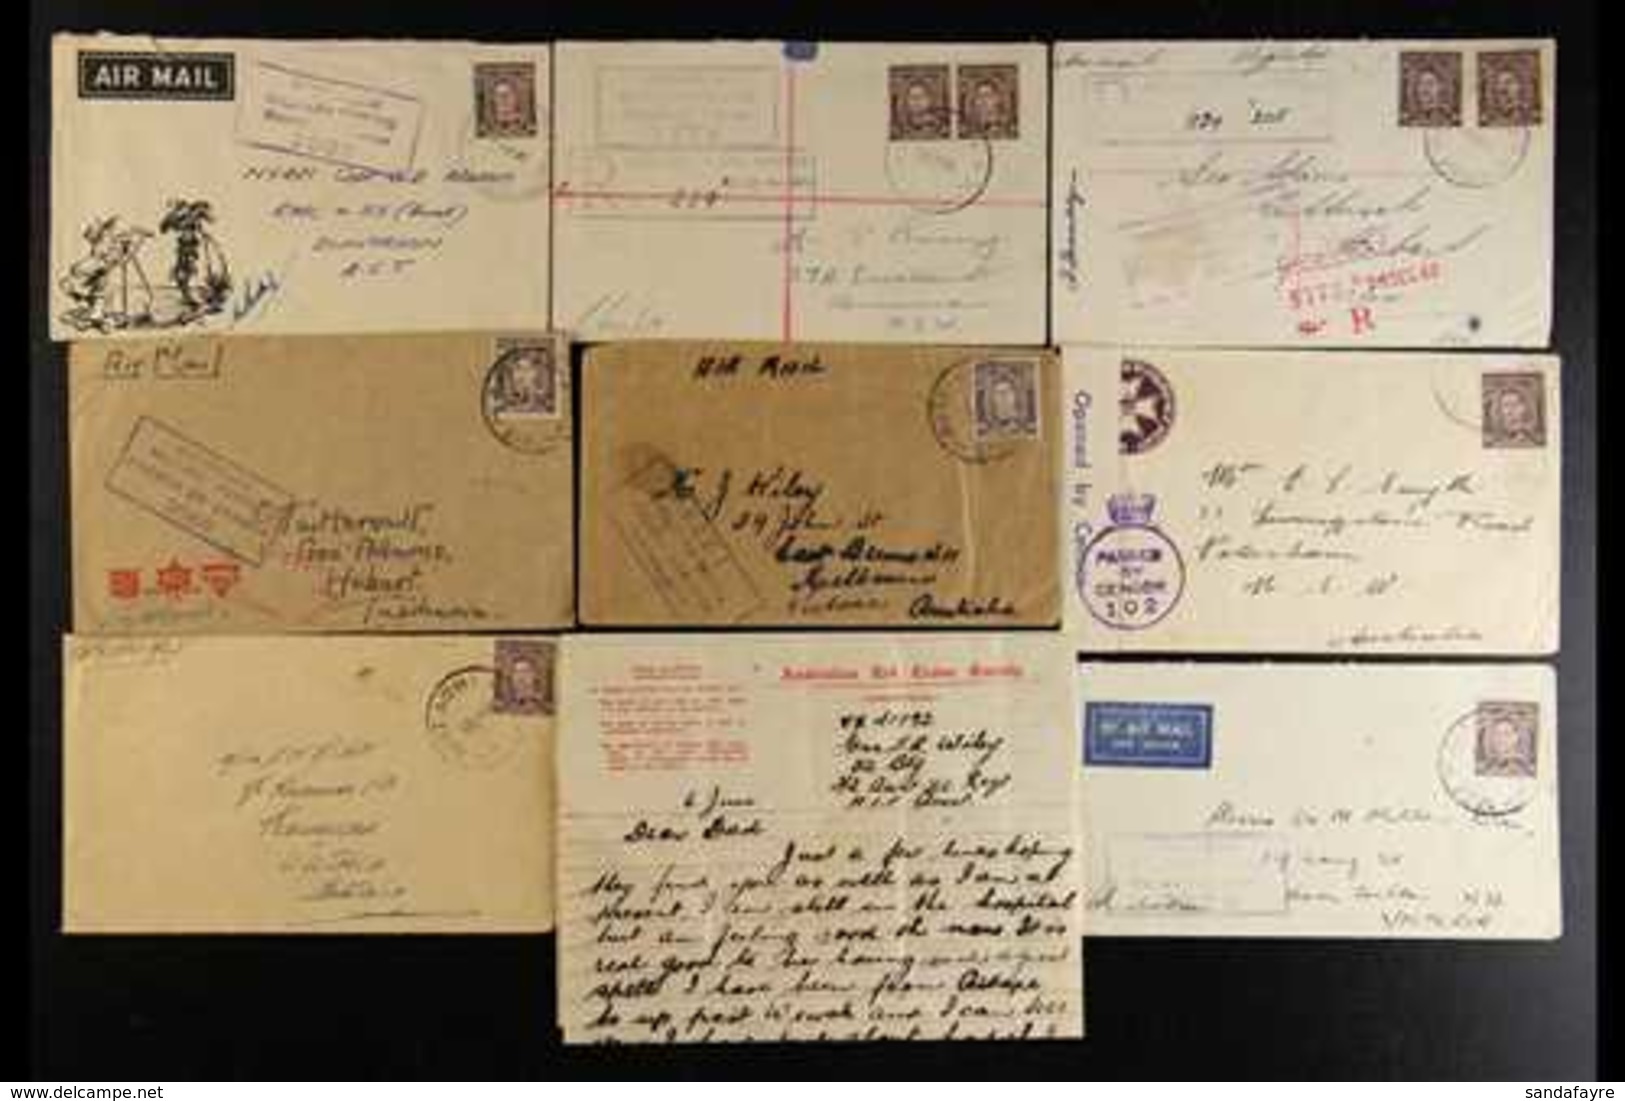 WORLD WAR II - AUSTRALIAN ARMY COVERS Fine Collection Of Covers To Australia, Bearing Australia KGVI Stamps Tied By Clea - Papua Nuova Guinea